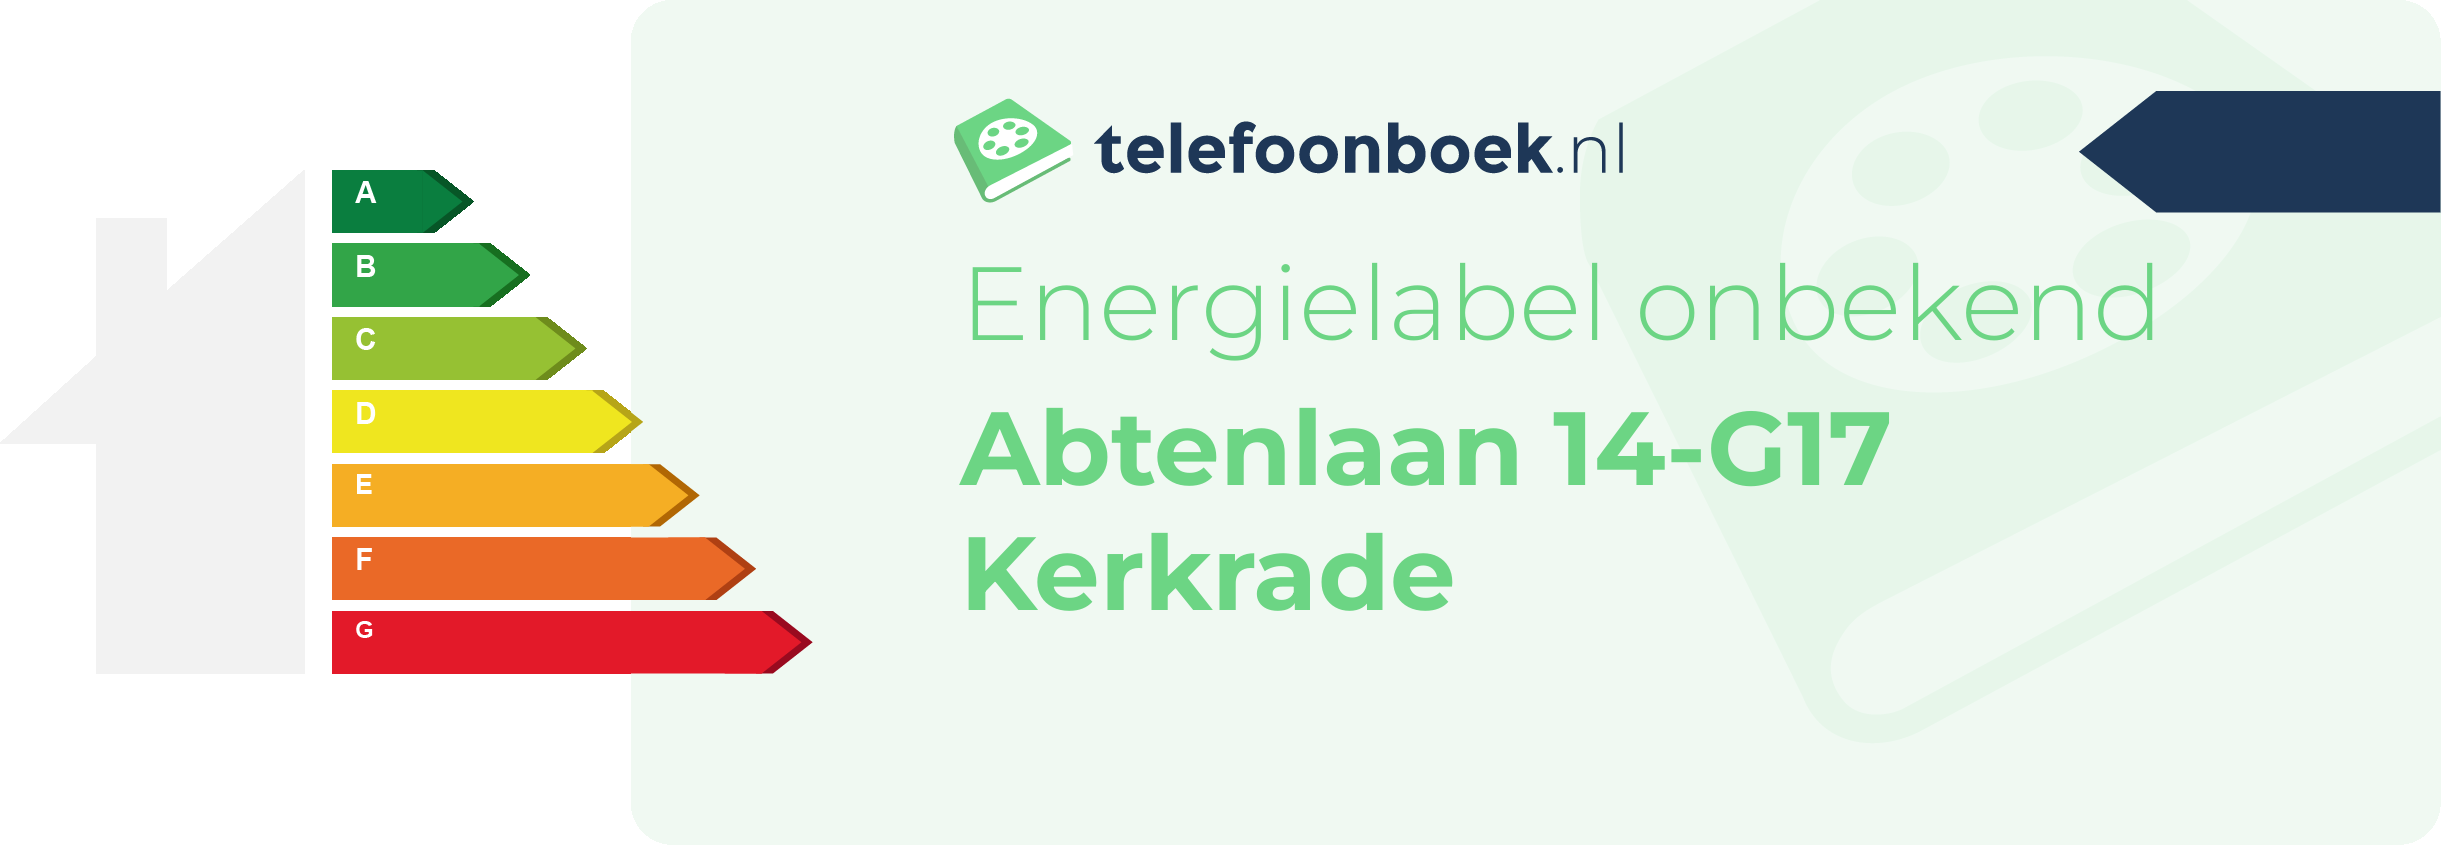 Energielabel Abtenlaan 14-G17 Kerkrade